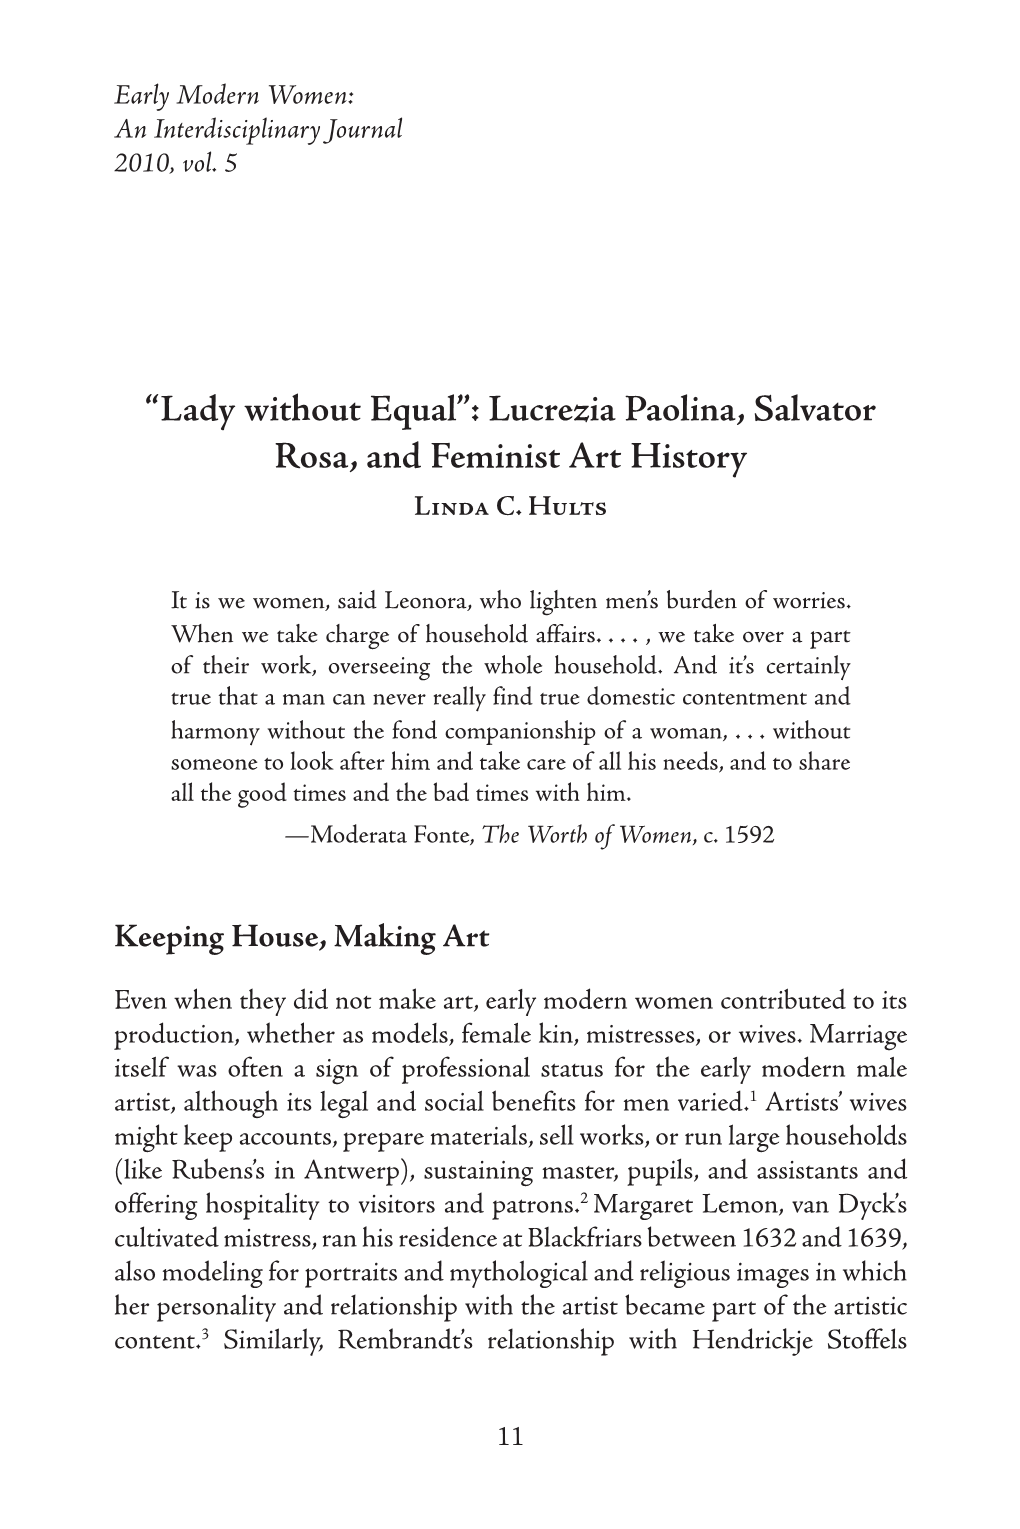 Lucrezia Paolina, Salvator Rosa, and Feminist Art History Linda C